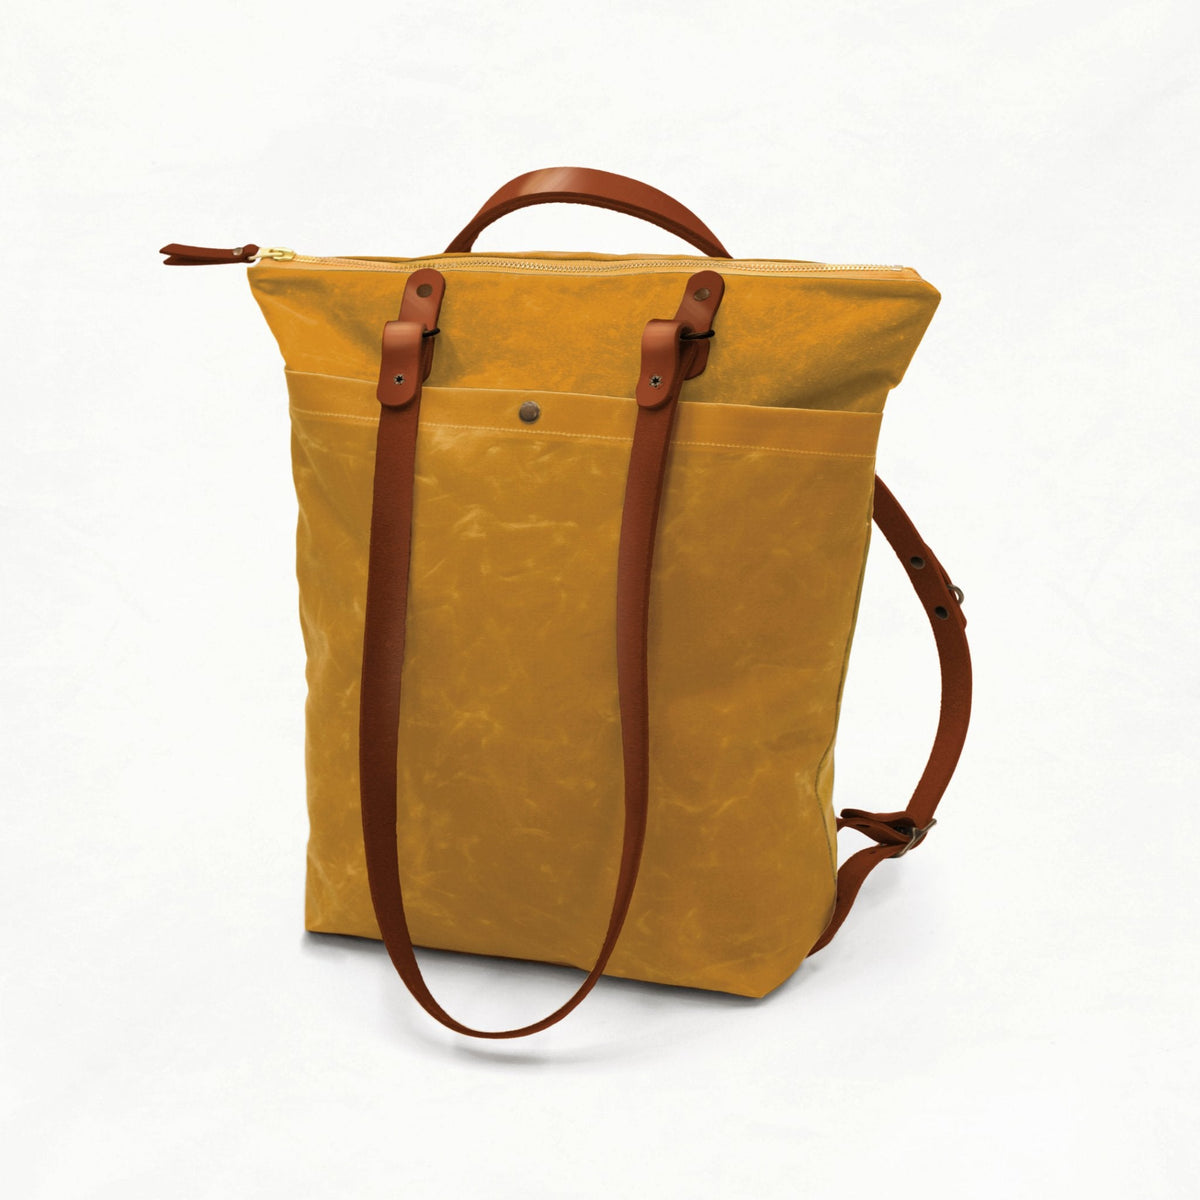 Maywood - Mustard Bag Maker Kit - MAY - MUS - MUS - CHEST - AB - MUS - Maker Kit - Klum House